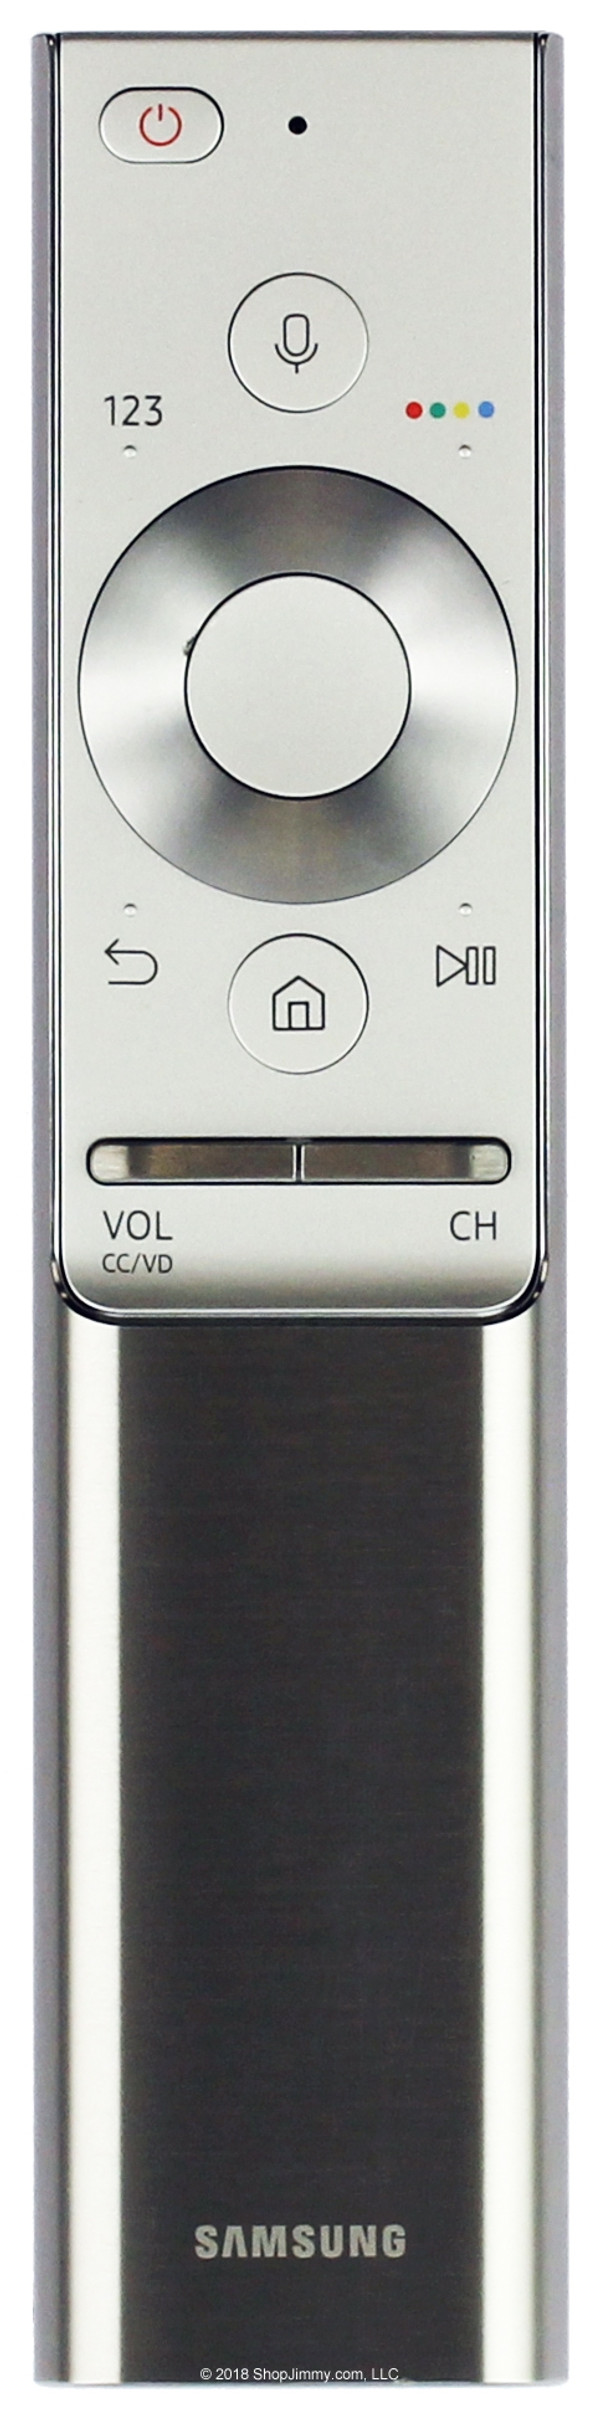 Samsung BN59-01291A Remote Control -- Open Bag